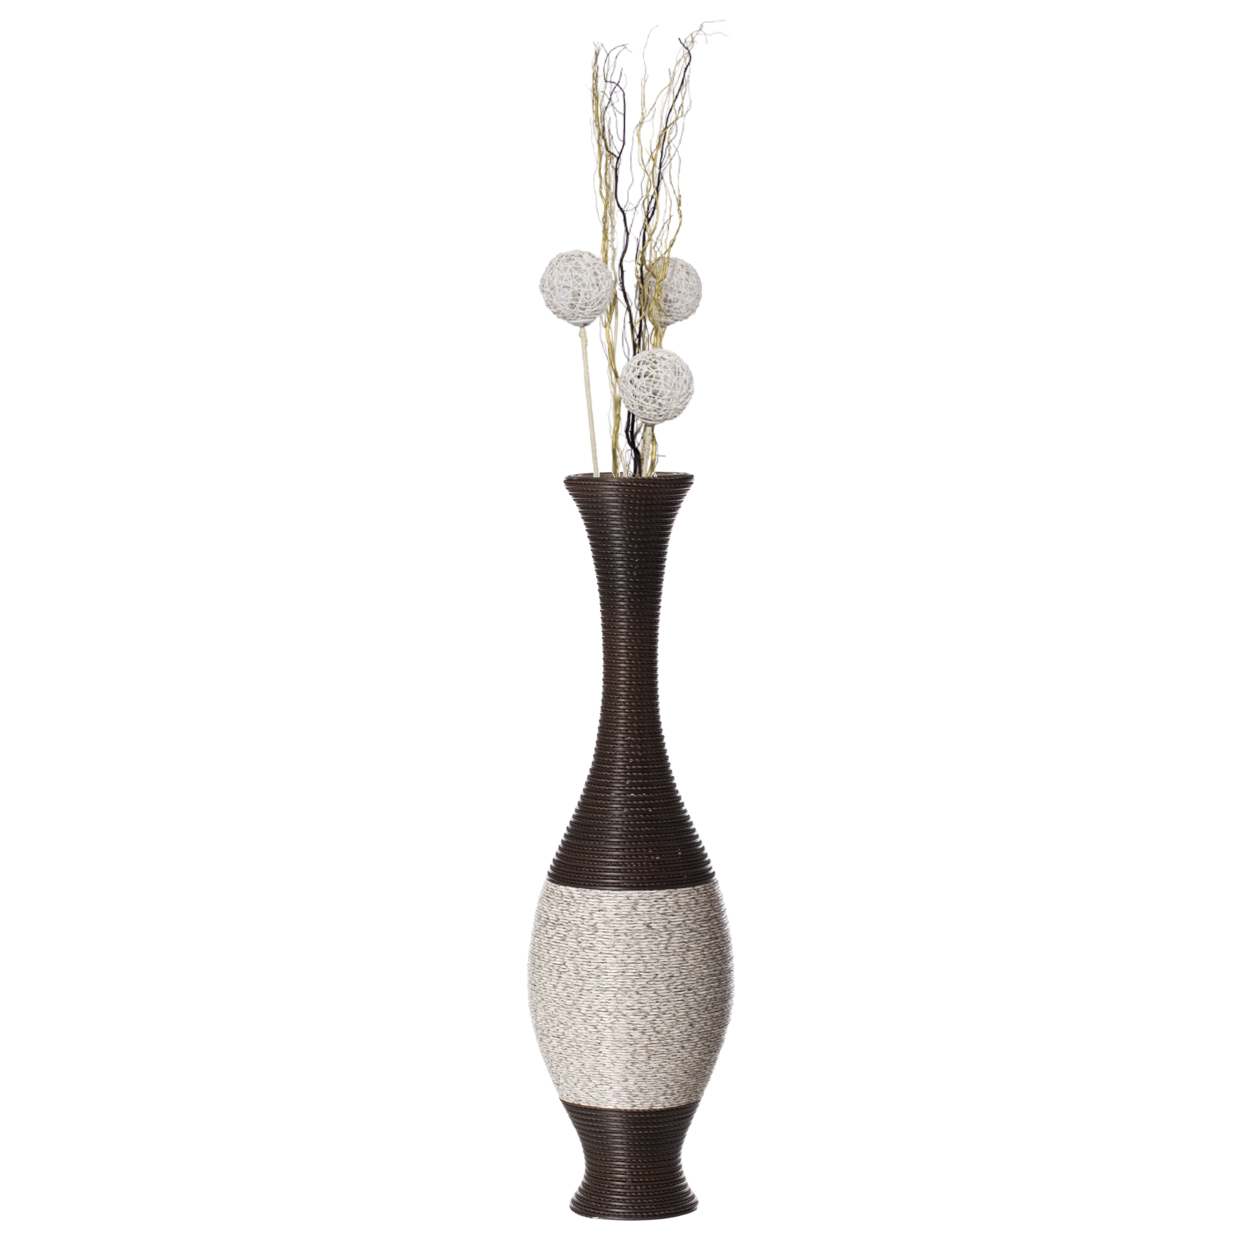 Tall Decorative Floor Vase, PVC Floor Vase, Tall Flower Holder, Brown Floor Vase, Floor Vase 41- Inch -Tall